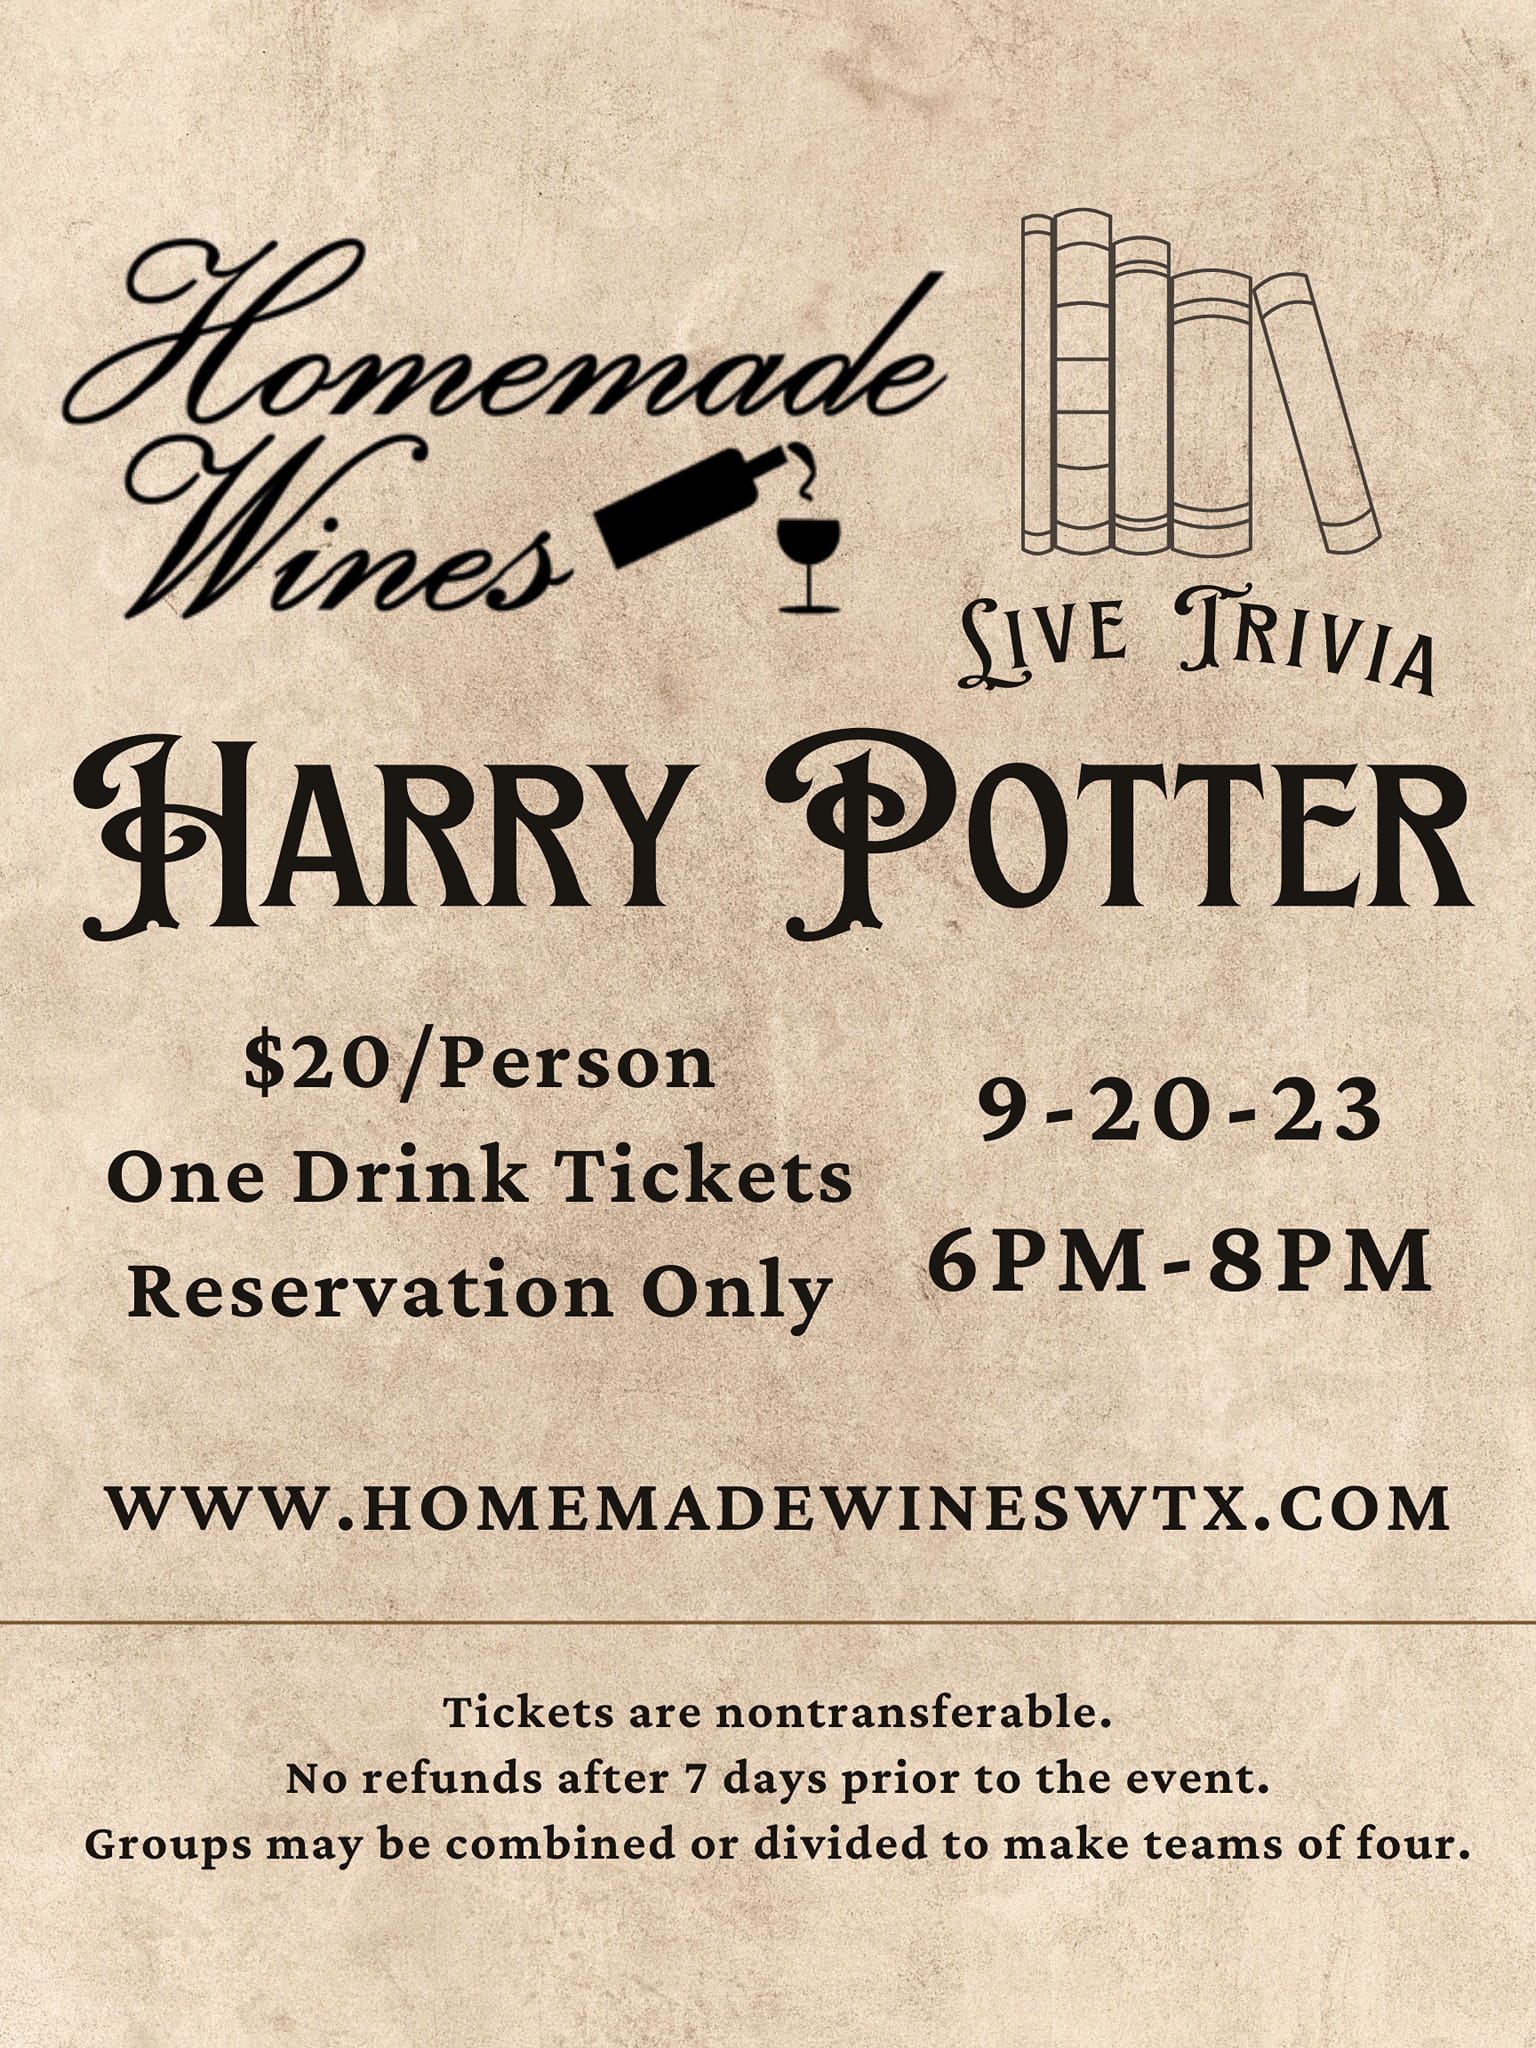 Harry Potter Trivia Night at Homemade Wines